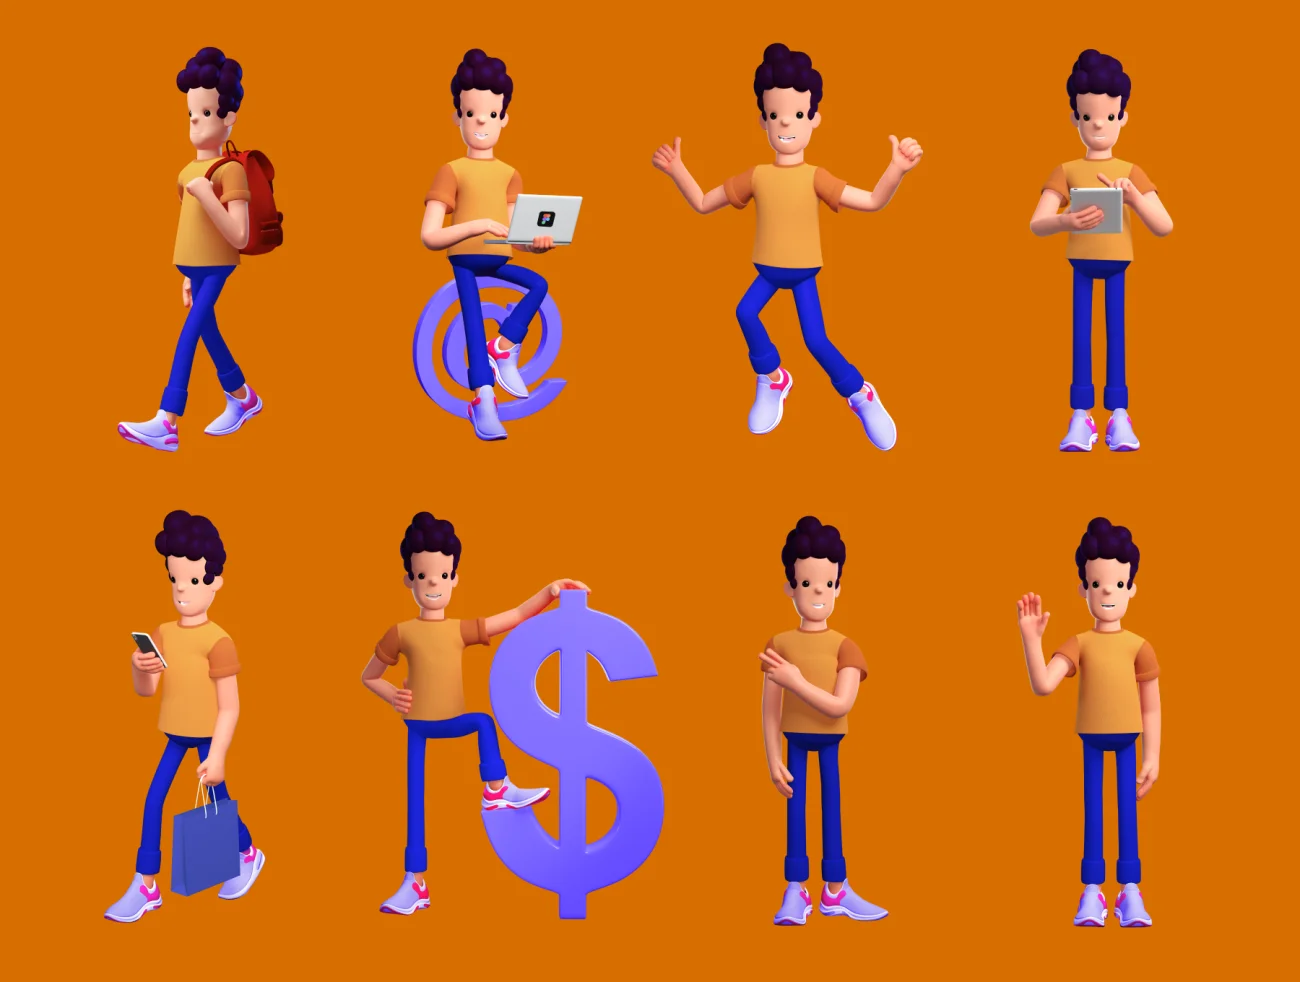 3D character with 10 poses 10个不同姿势的趣味3D人物角色插图套件-3D/图标、人物插画、场景插画、学习生活、插画、社交购物、职场办公、金融理财-到位啦UI